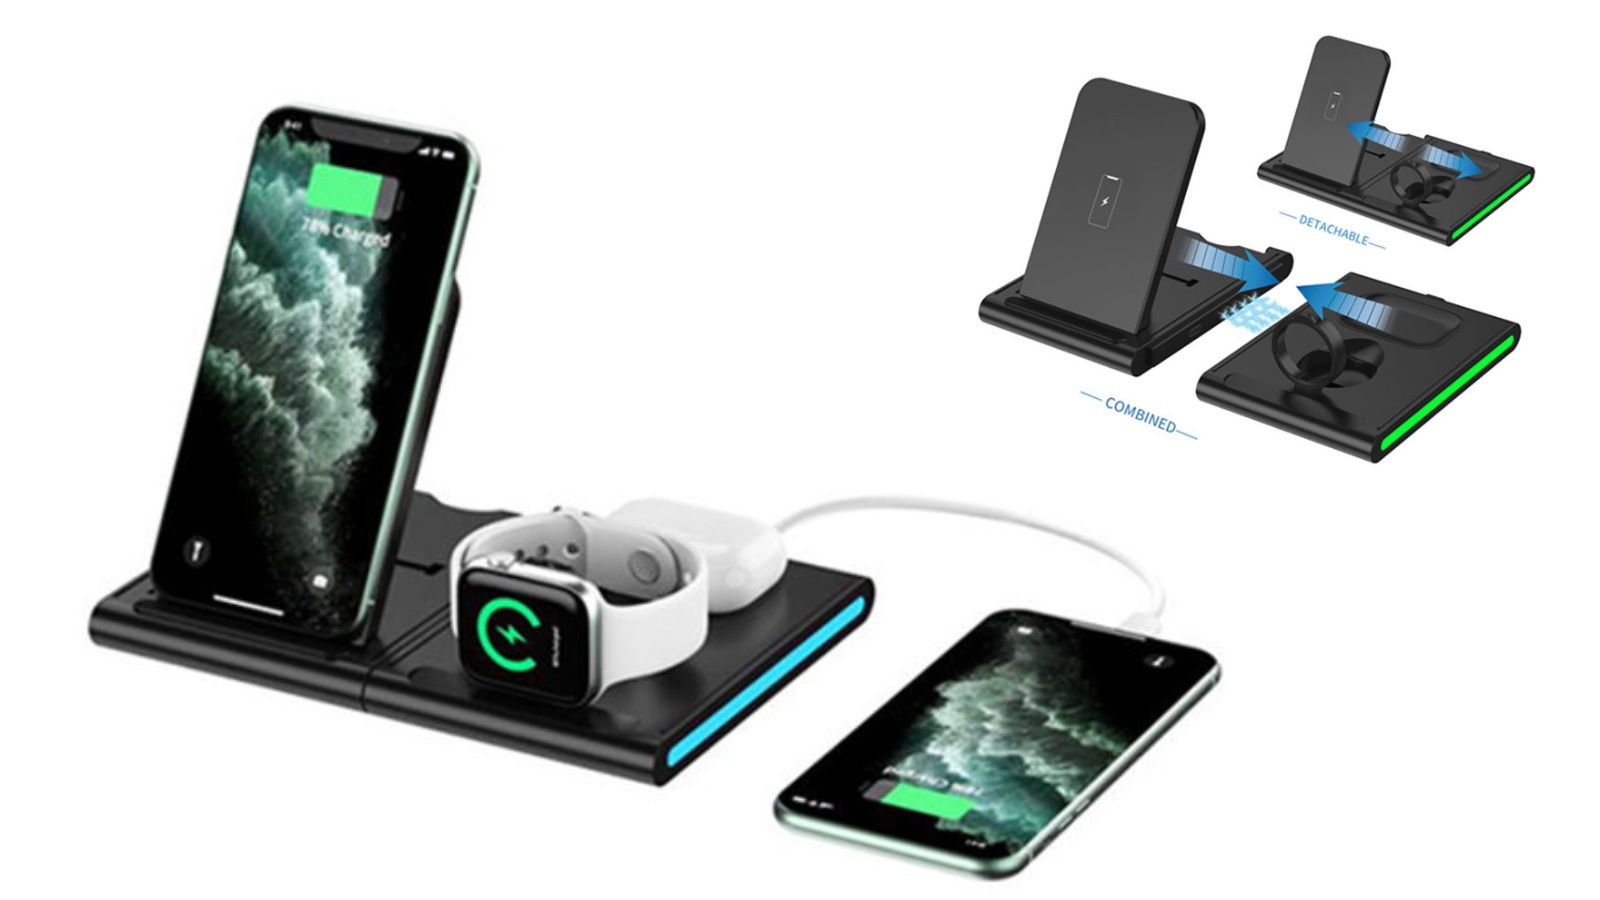  Chargeur sans fil 3 en 1 (iPhone, Airpods, Apple Watch)